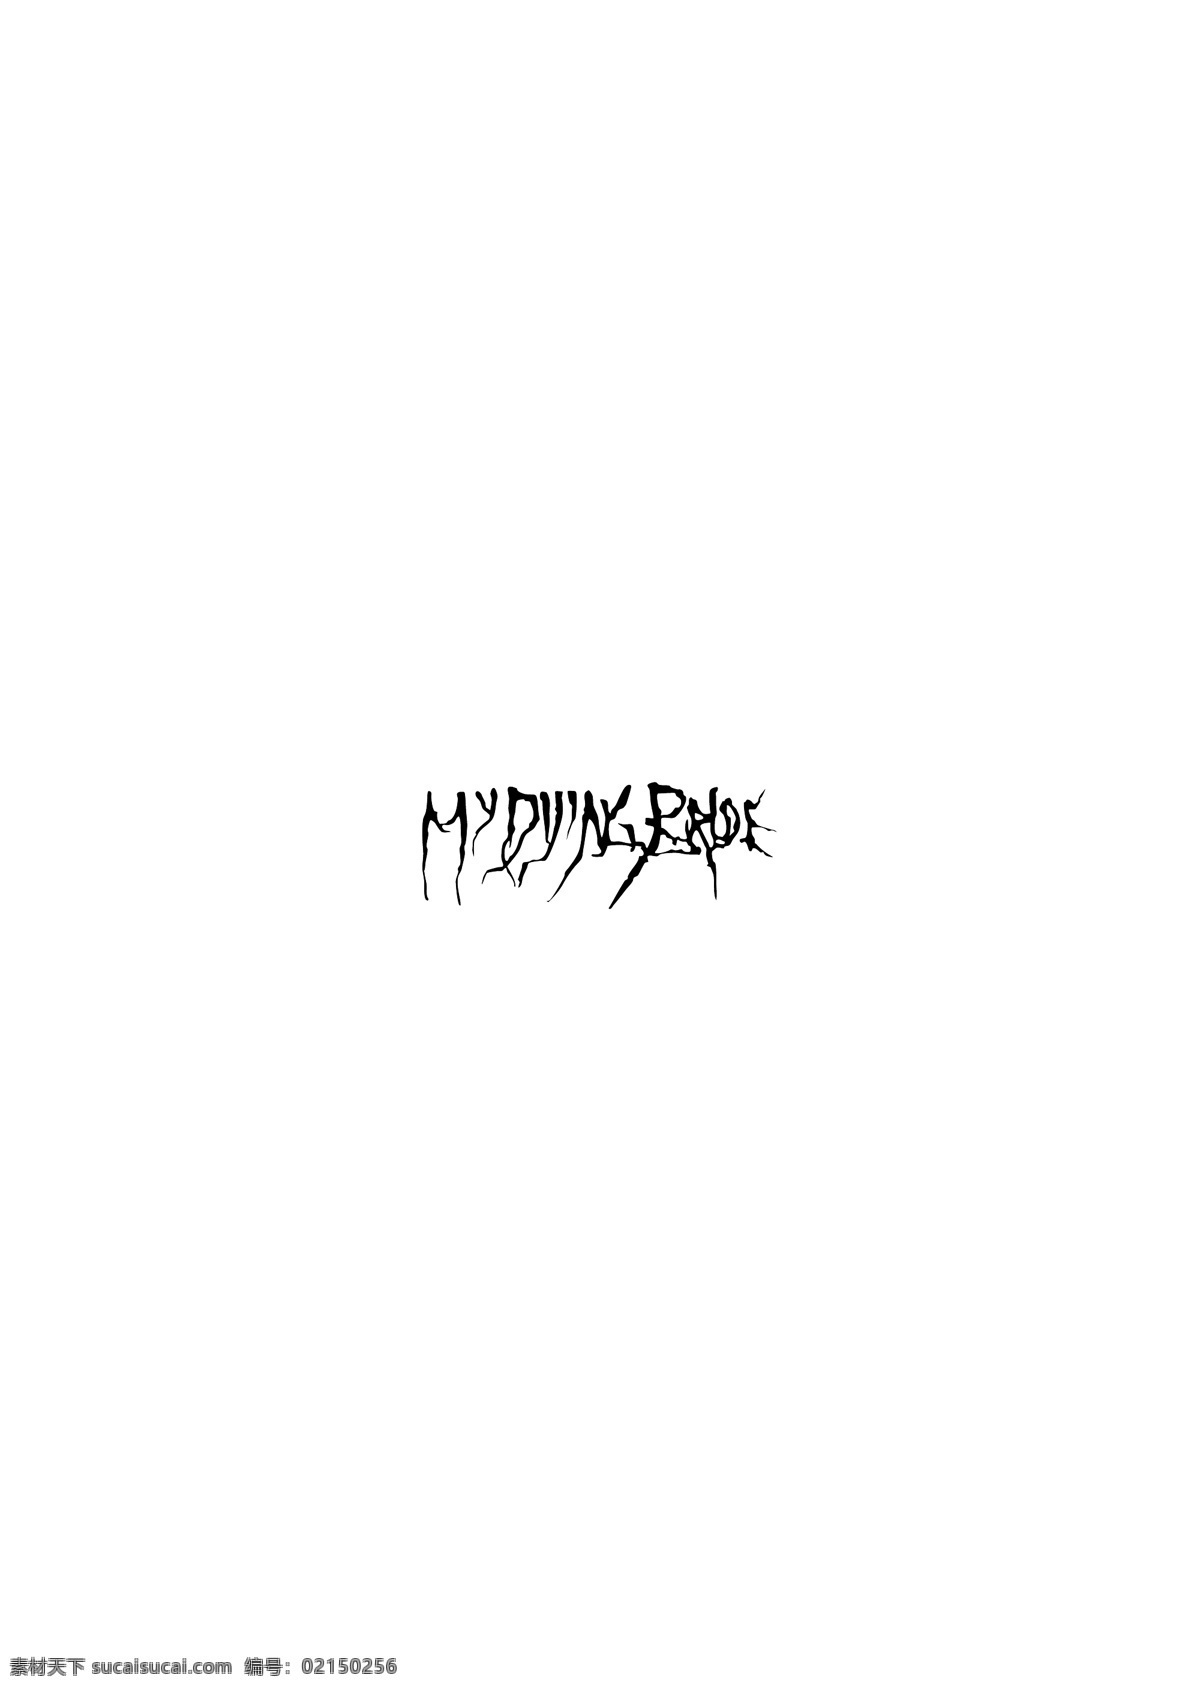 mydyingbride logo 设计欣赏 mydyingbridecd 唱片 标志 标志设计 欣赏 矢量下载 网页矢量 商业矢量 logo大全 红色